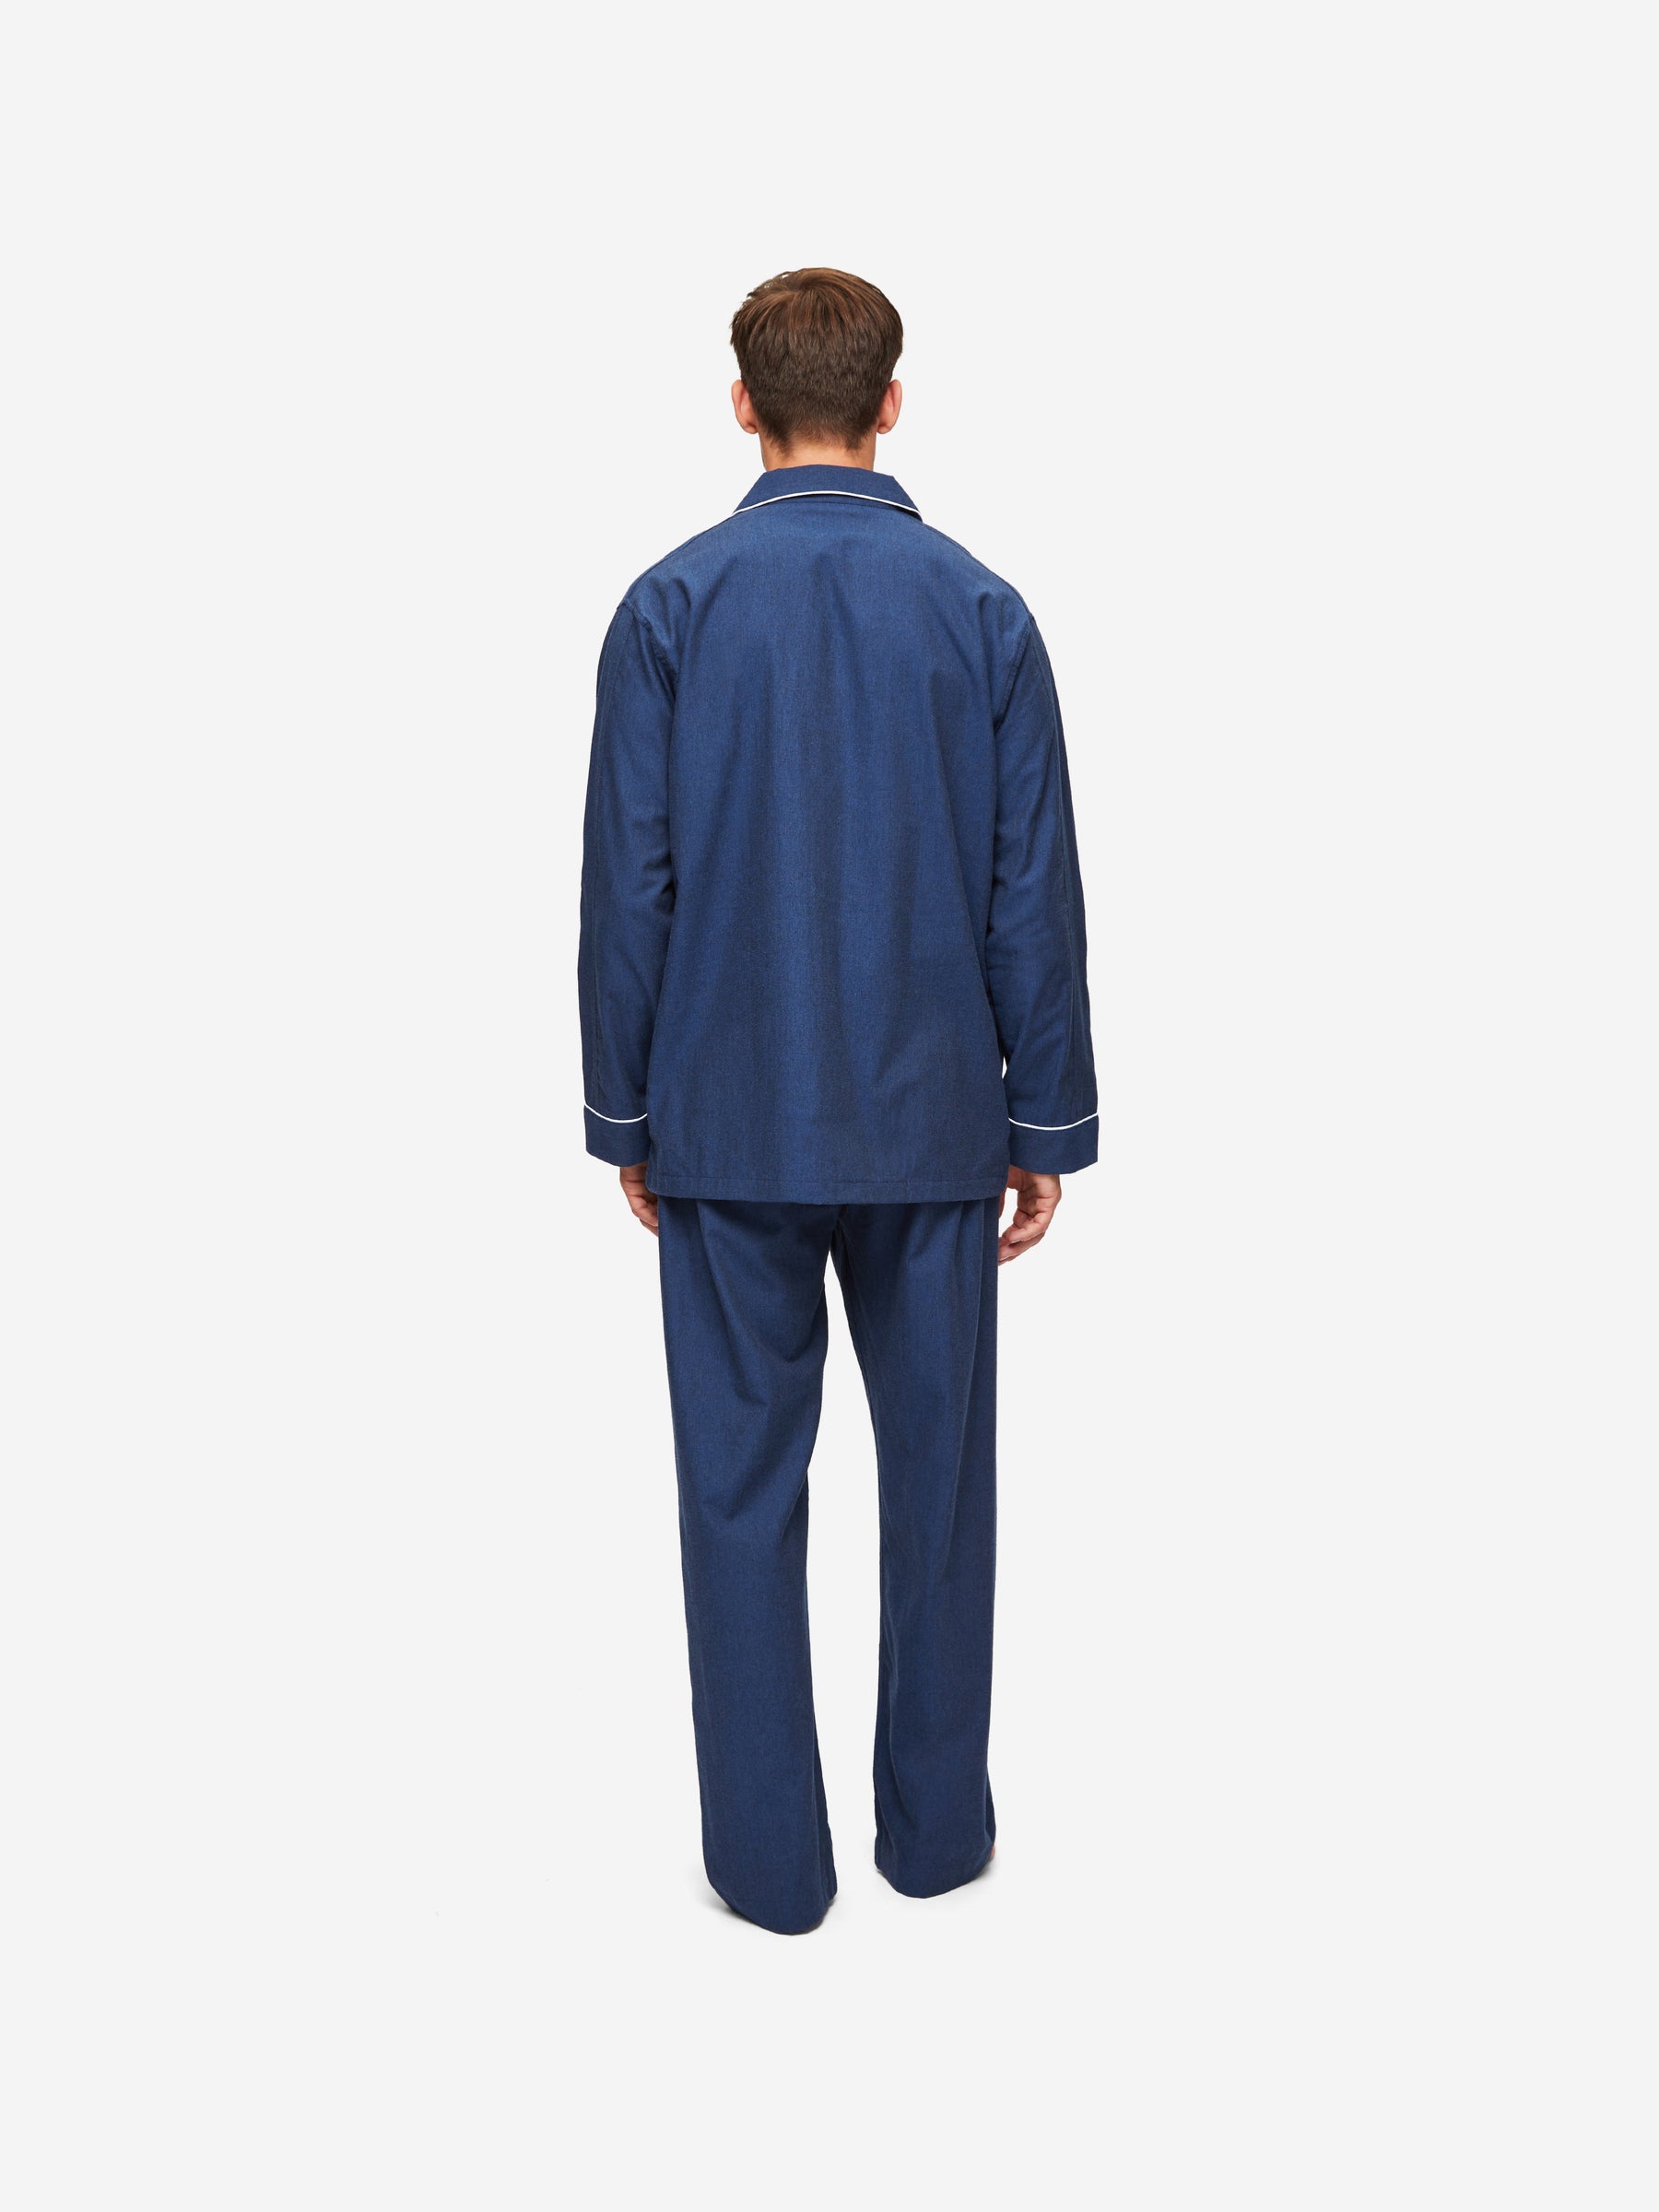 Men's Classic Fit Pyjamas Balmoral 3 Brushed Cotton Navy